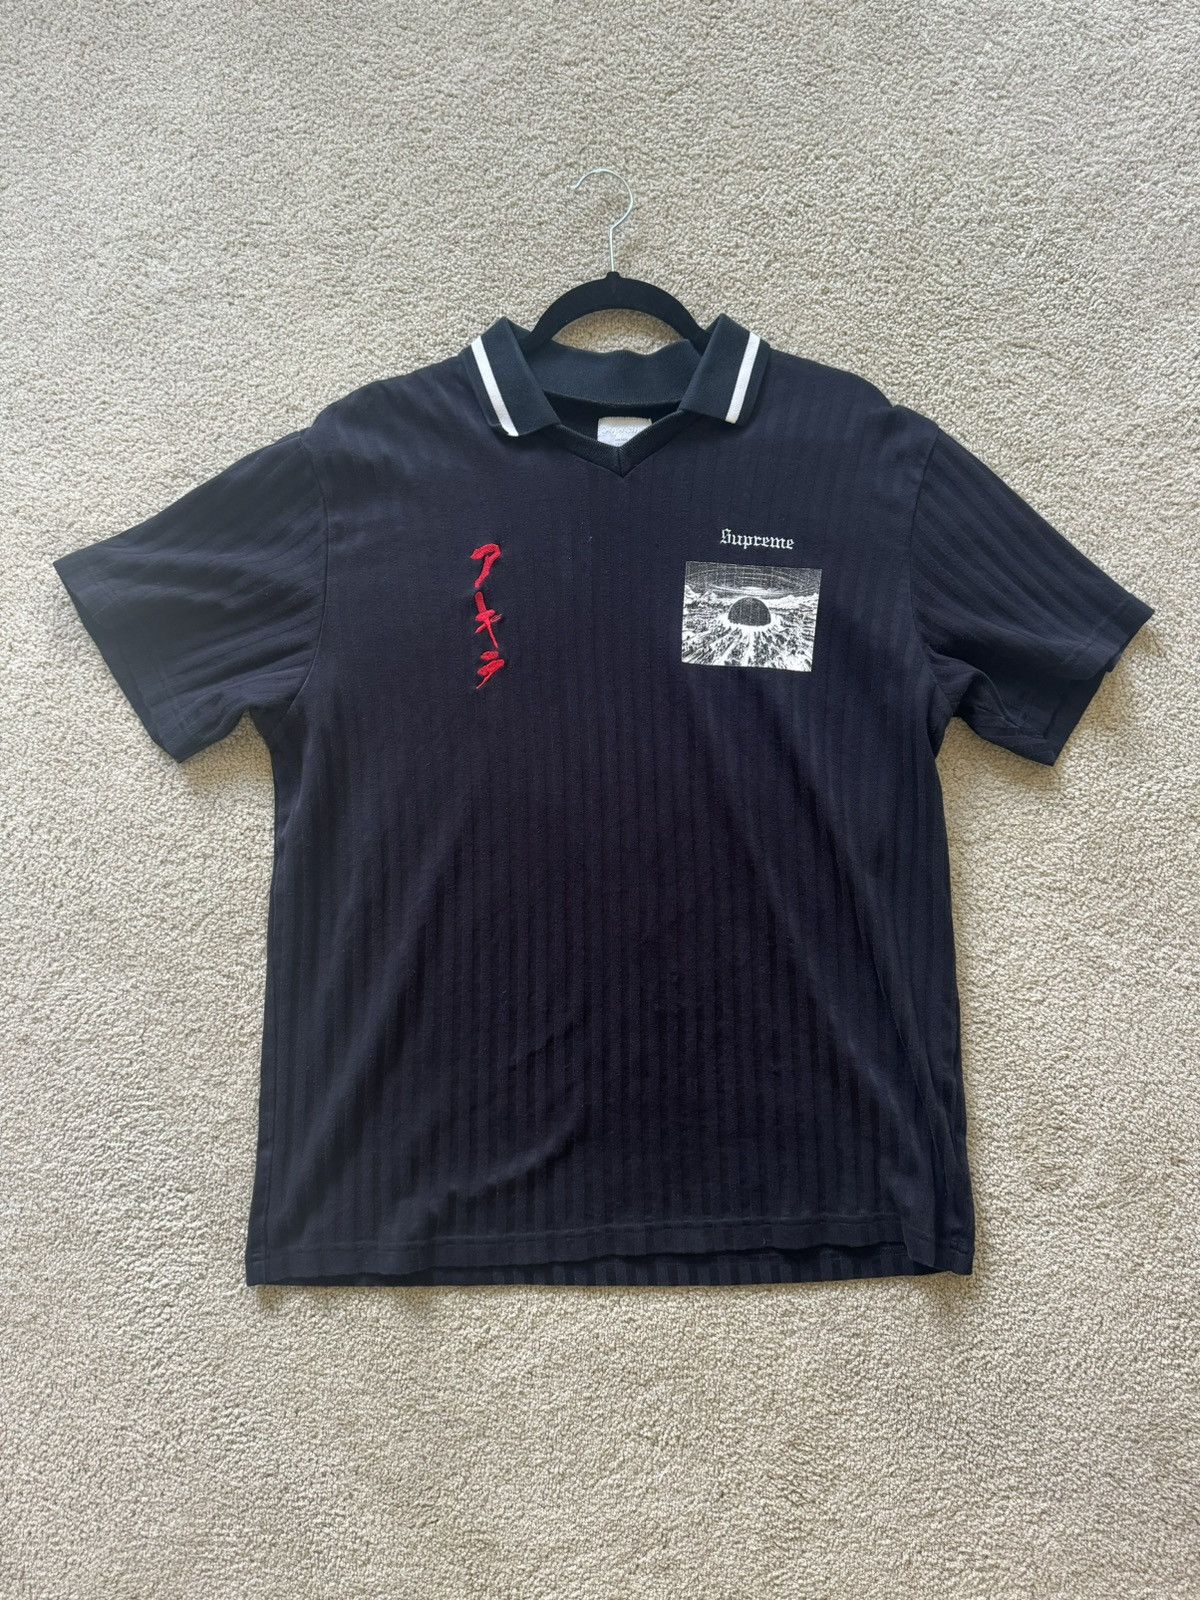 Supreme Supreme x Akira fw17 soccer jersey | Grailed